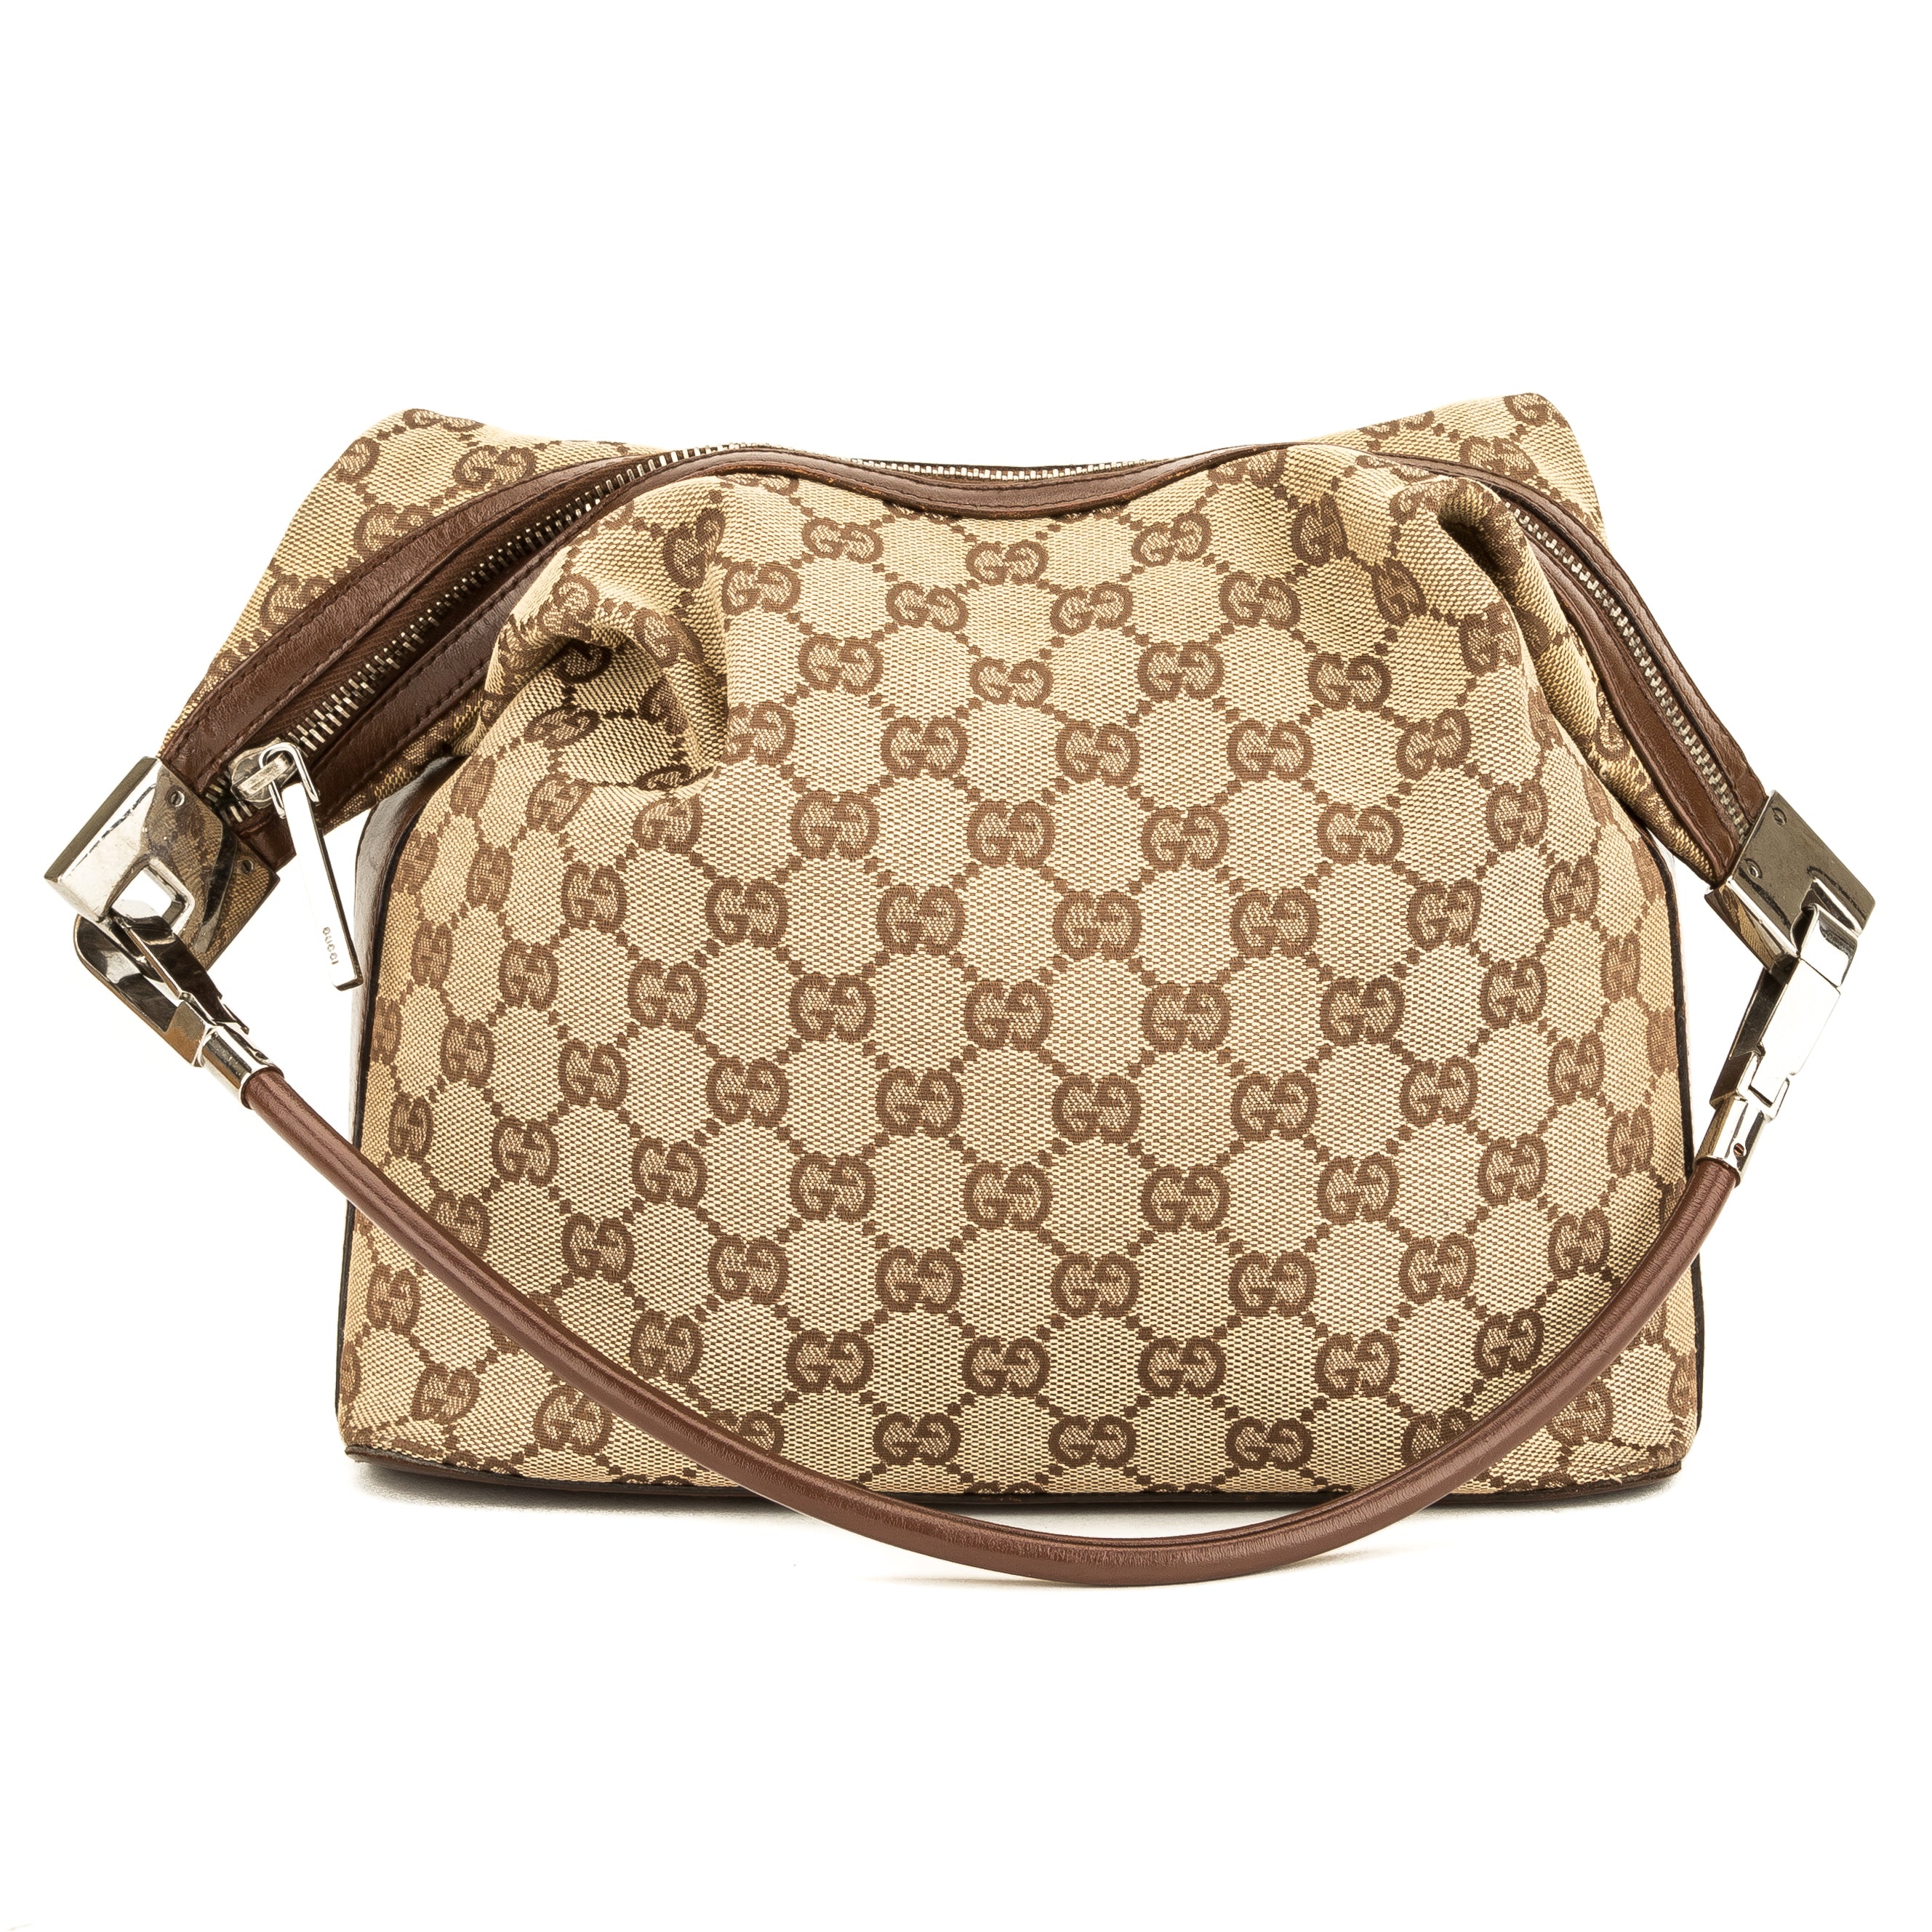 Where Can I Buy Gucci Handbags